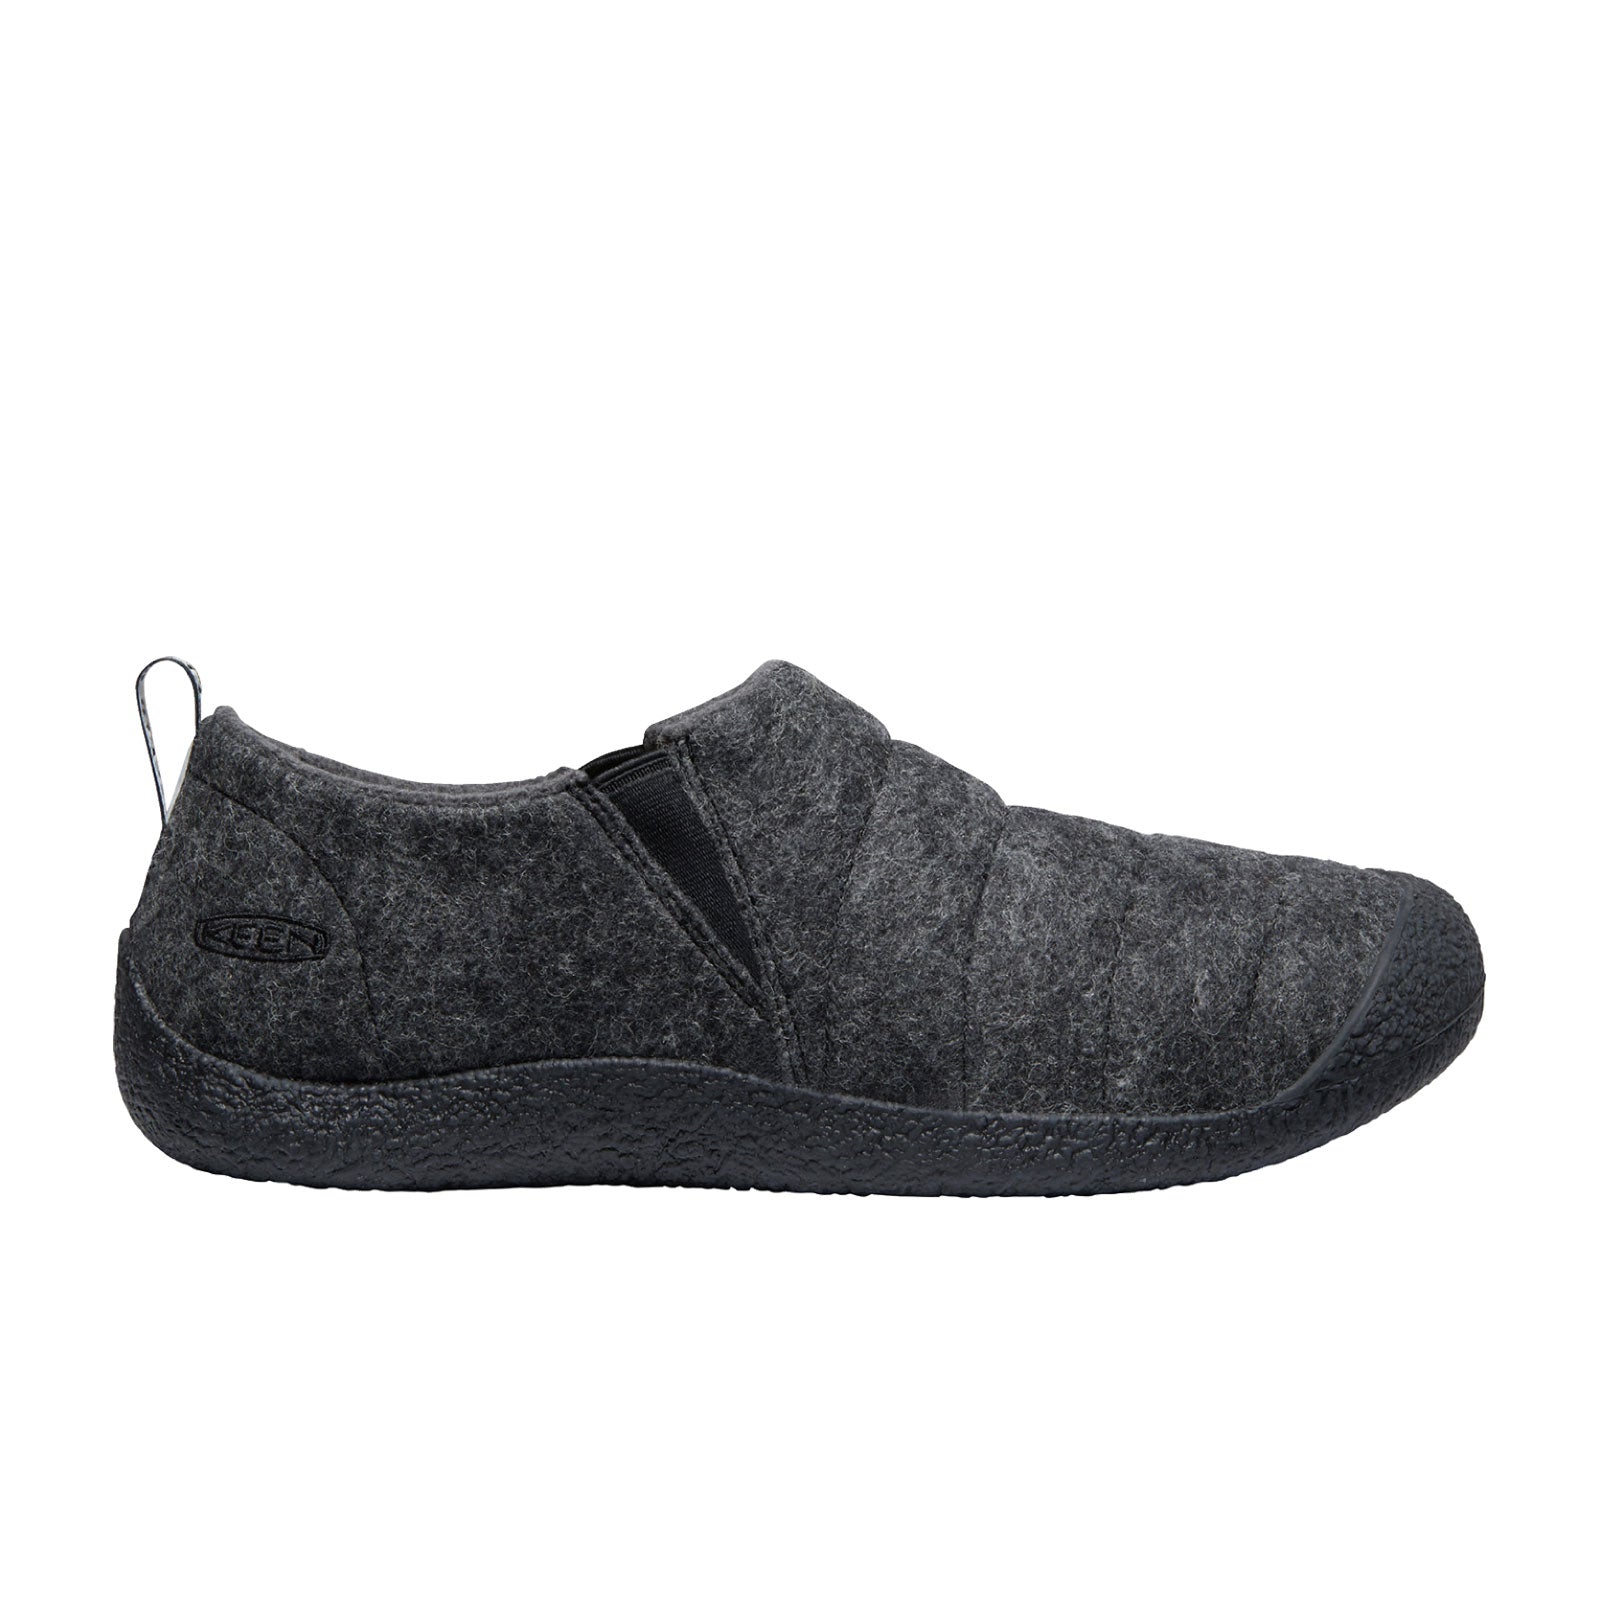 Keen Howser II Slip-on (Men) - Charcoal Grey Felt/Black Dress-Casual - Slip Ons - The Heel Shoe Fitters